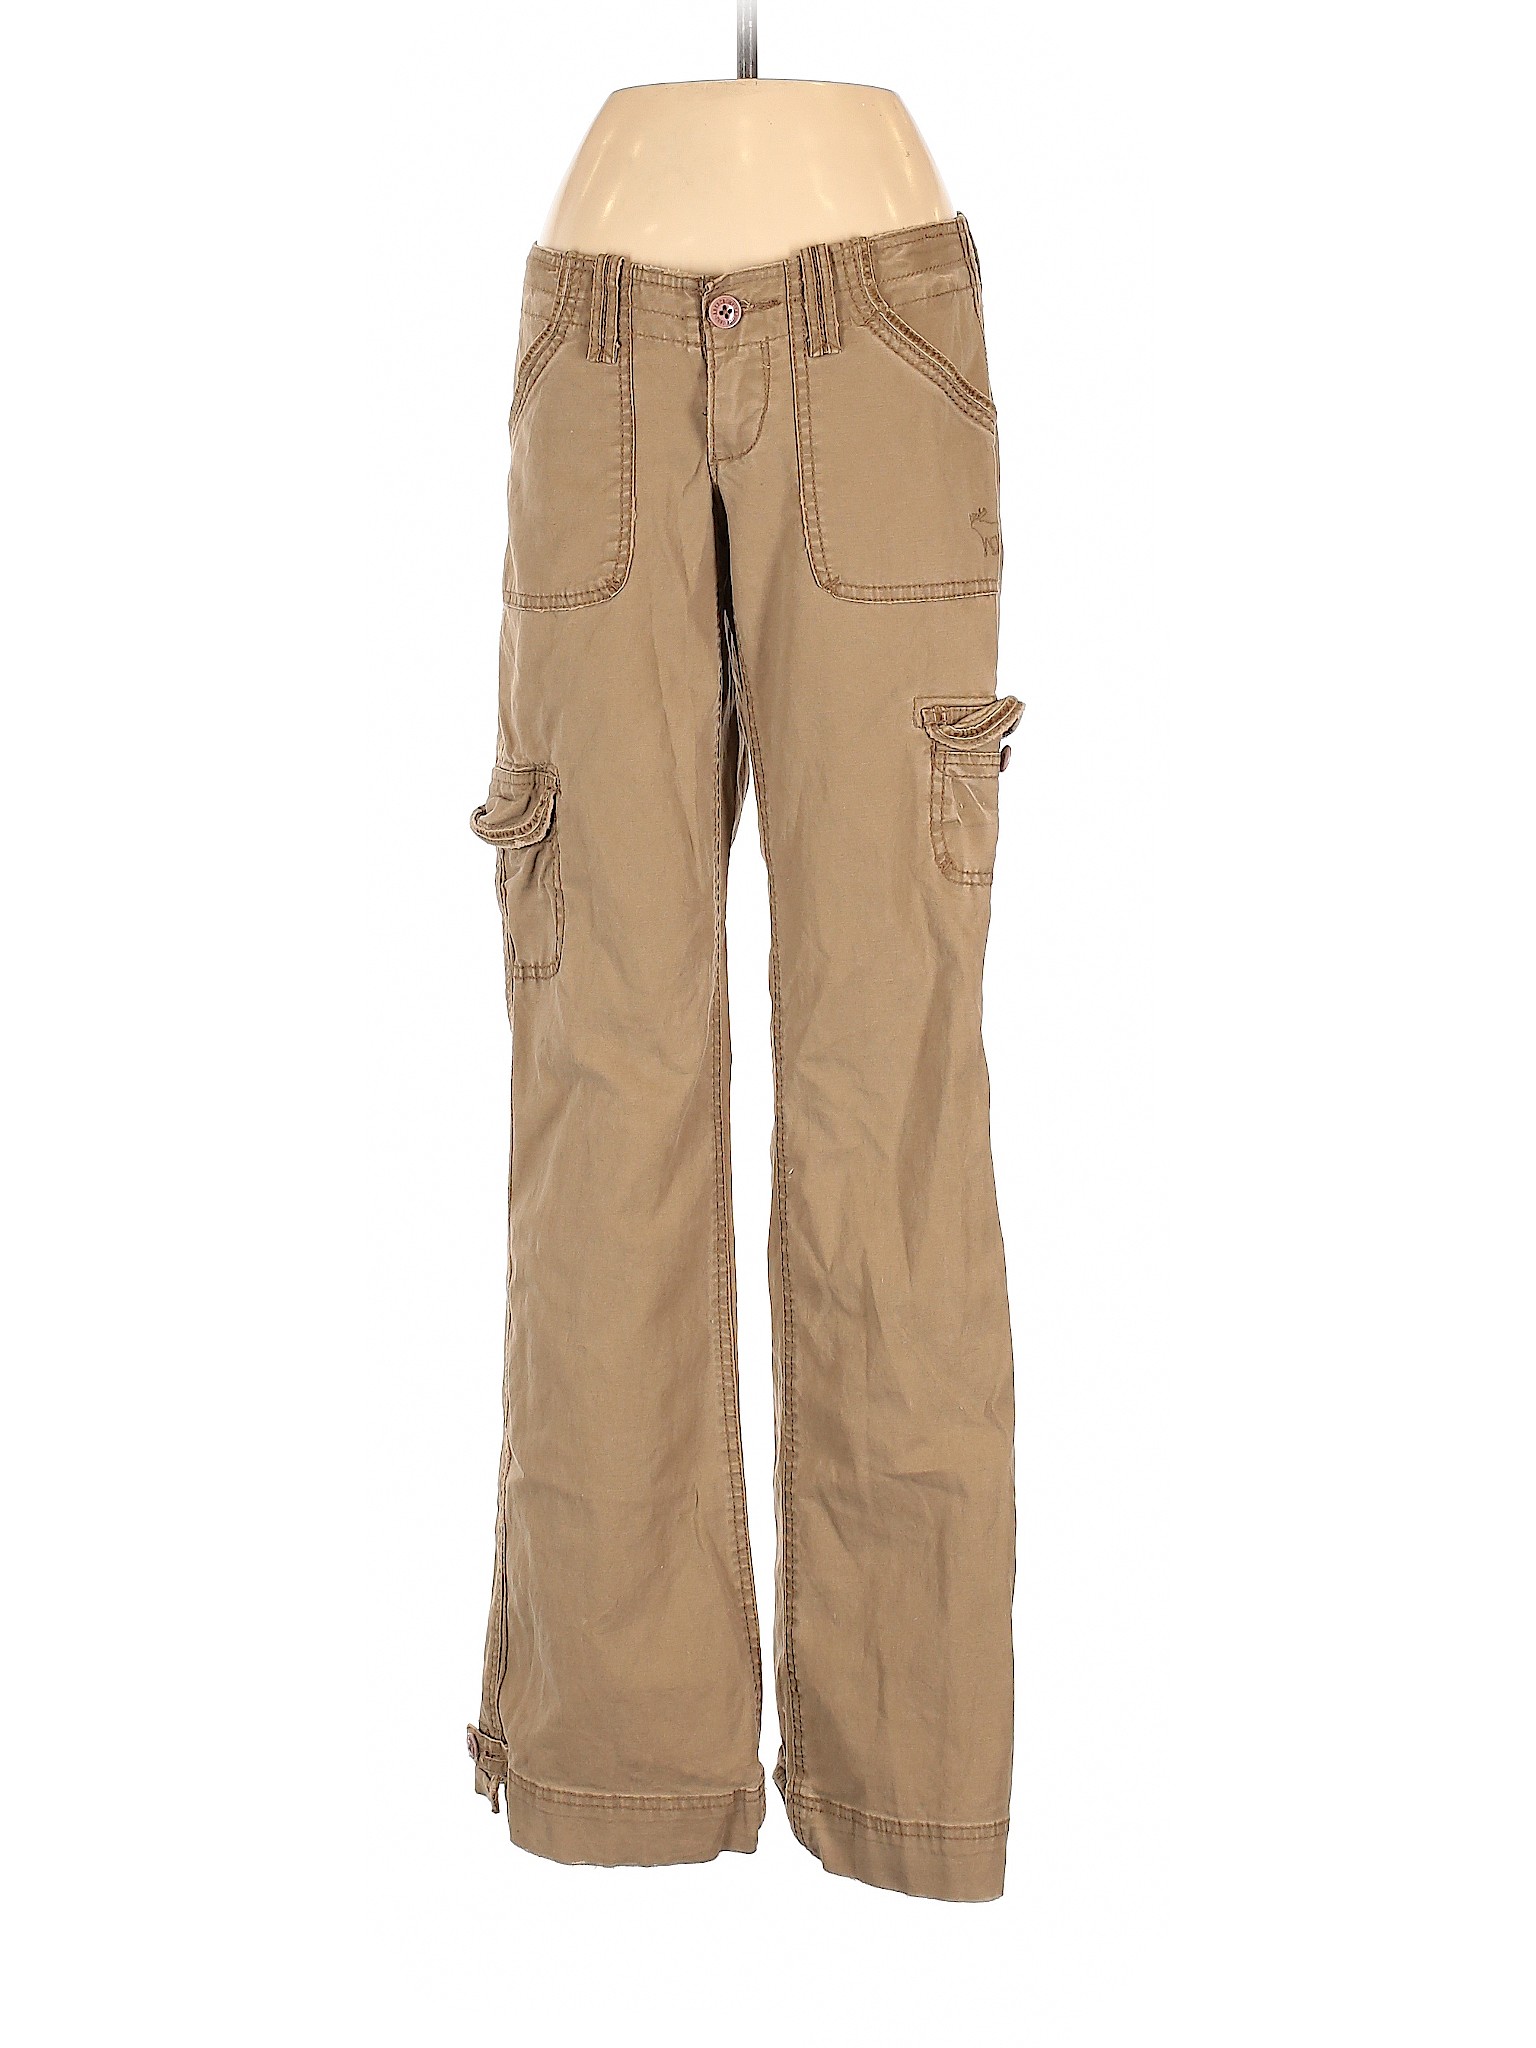 abercrombie cargo pants womens